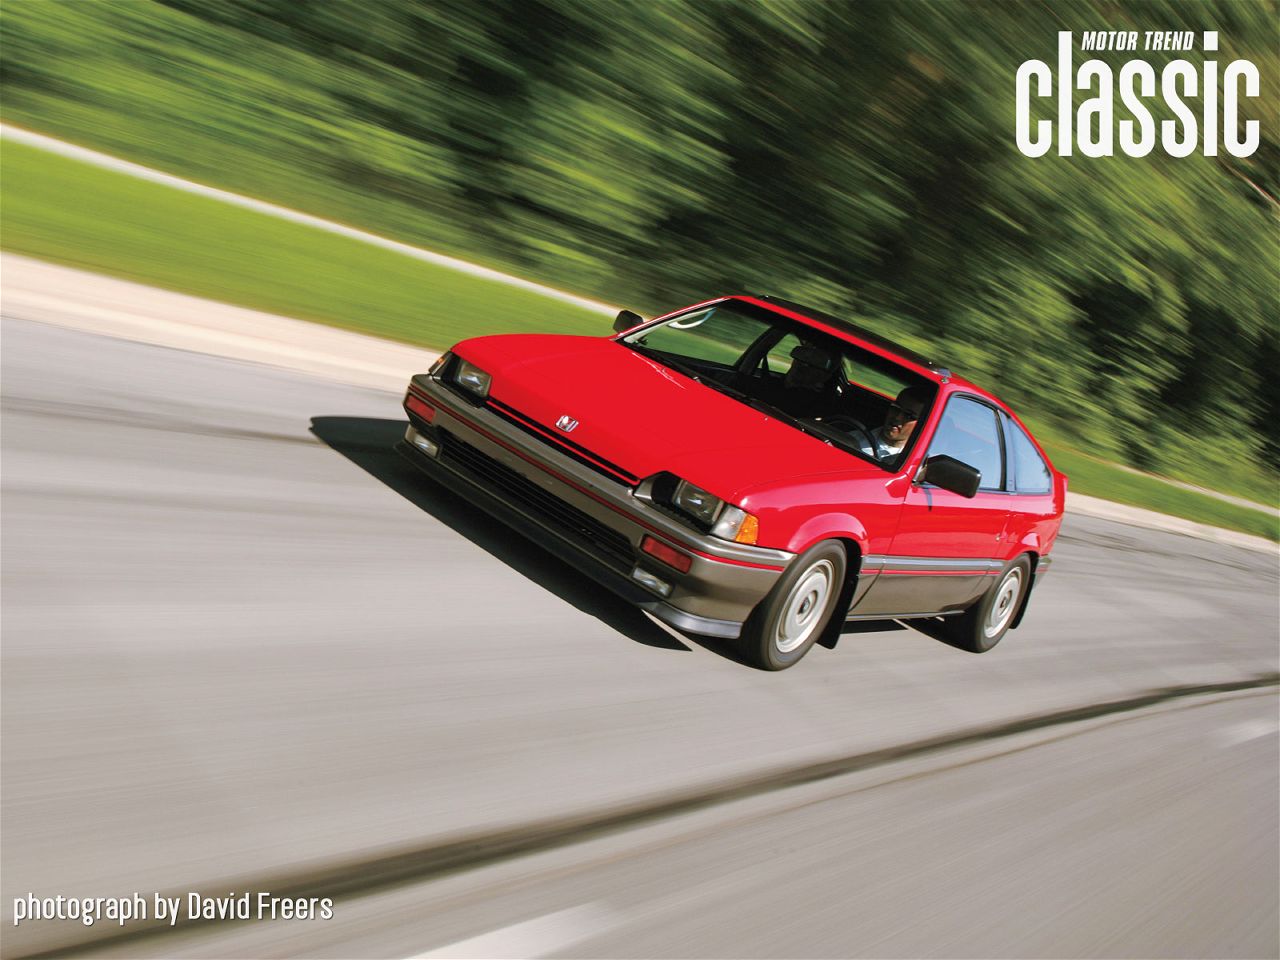 Honda Crx Si Wallpaper Gallery Motor Trend Classic